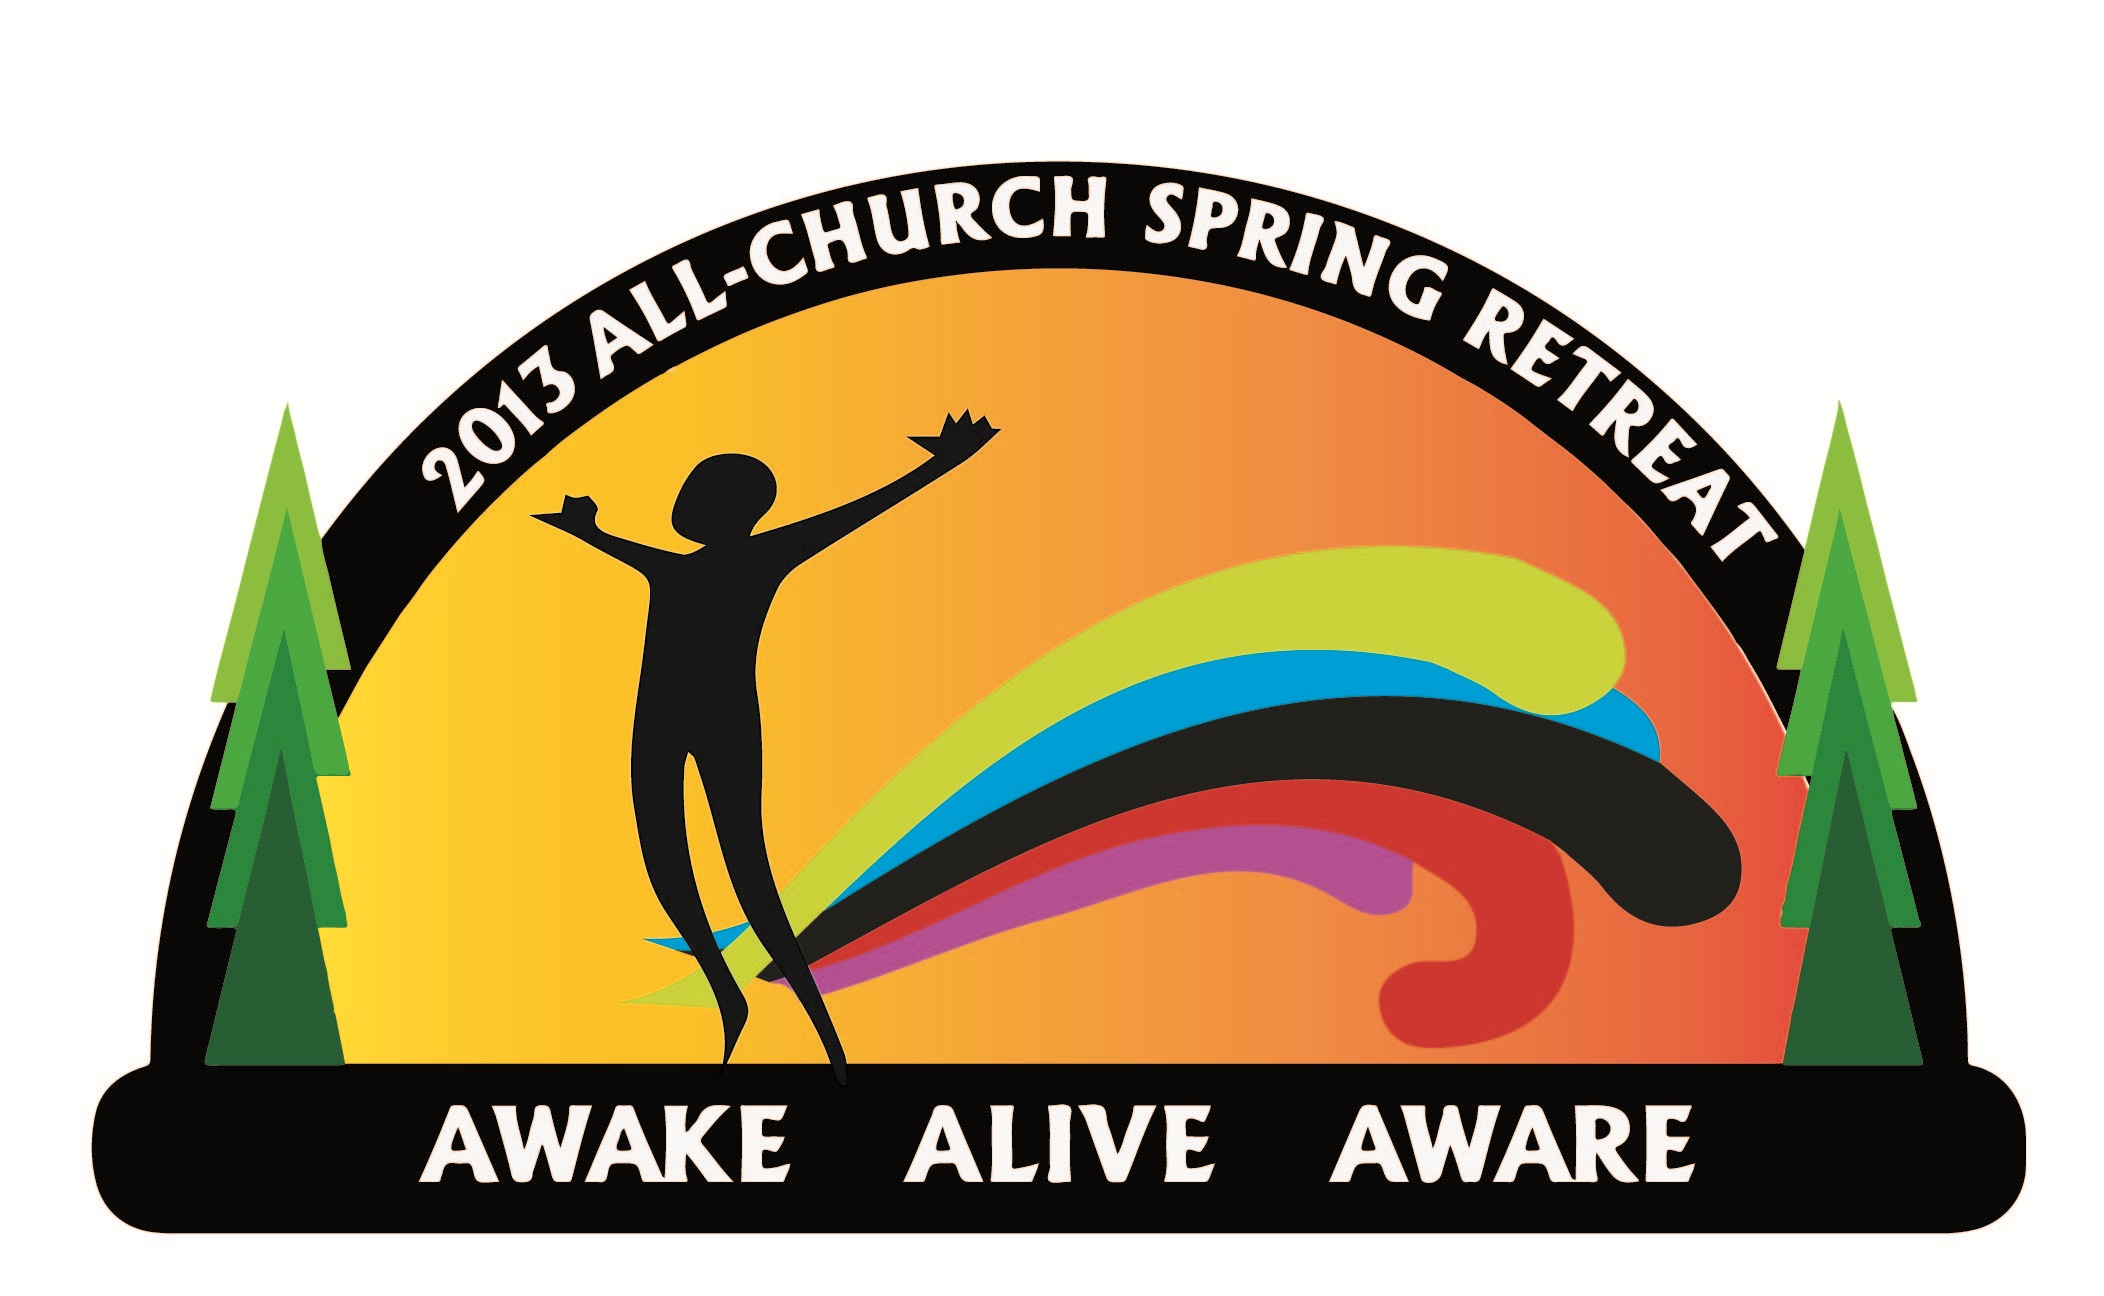 Church Bus Clipart All Church Spring Retreat At Magruder April 12  14